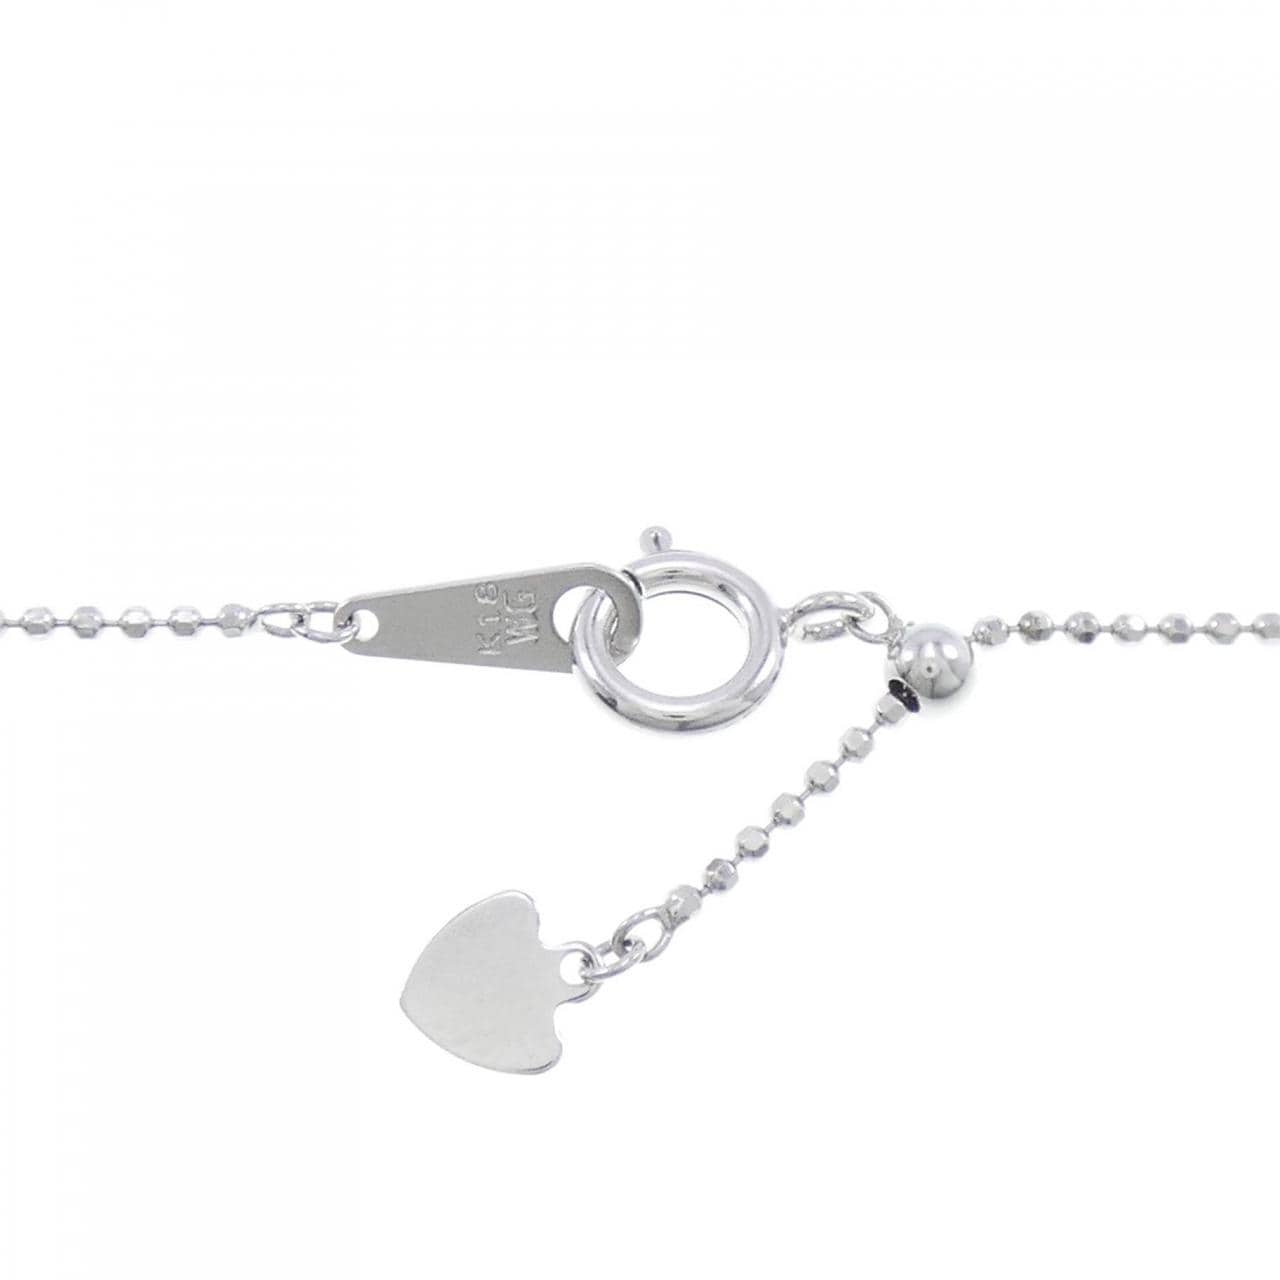 K18WG Garnet necklace 0.502CT